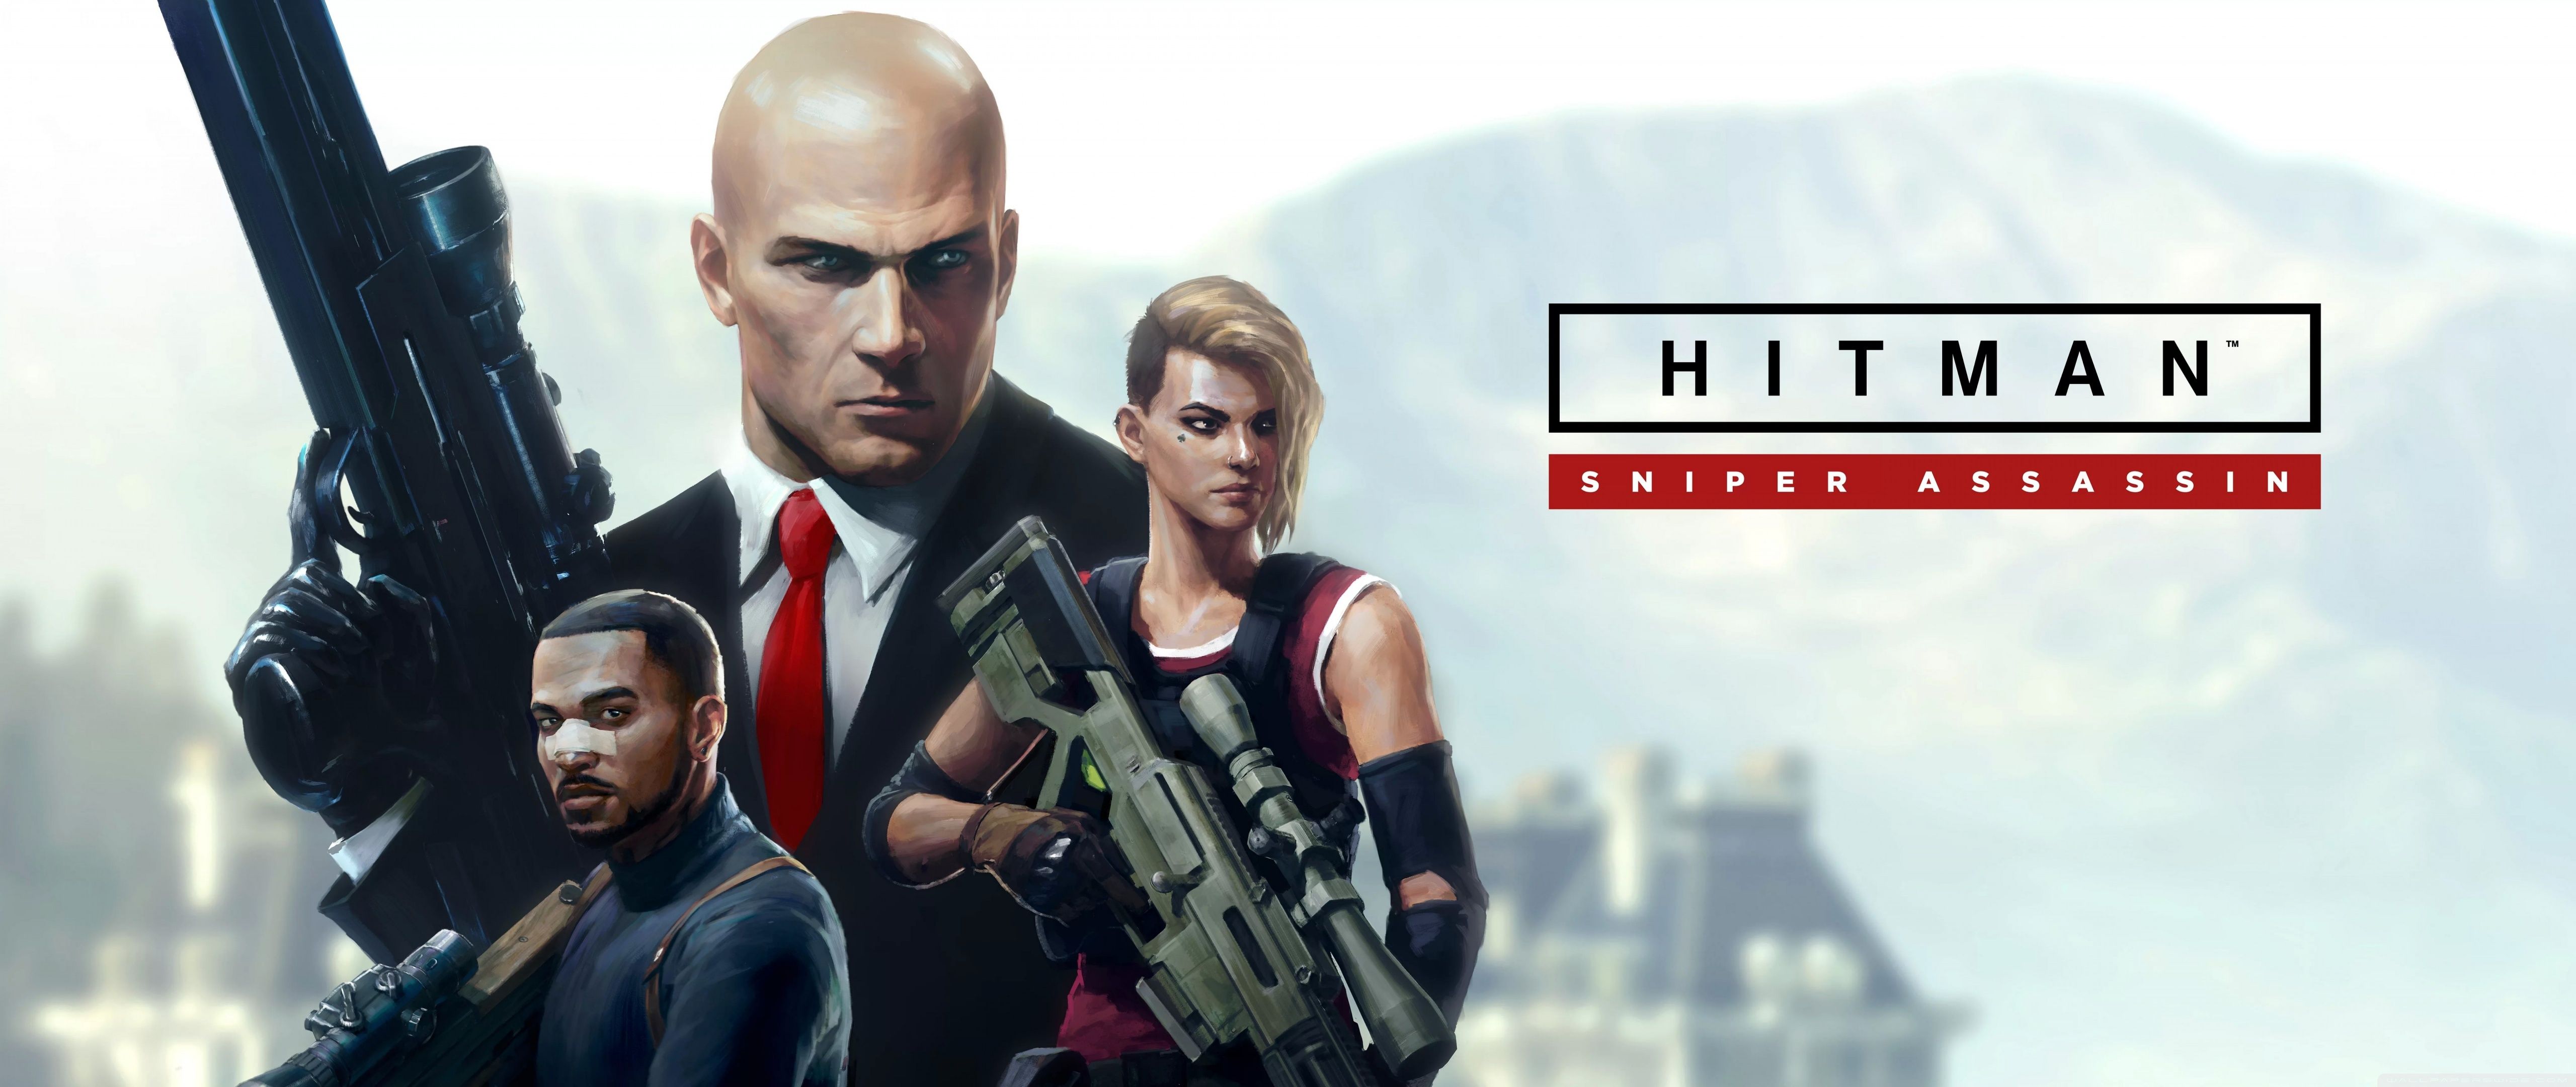 Hitman Sniper Assassin Ultra HD Desktop Background Wallpaper